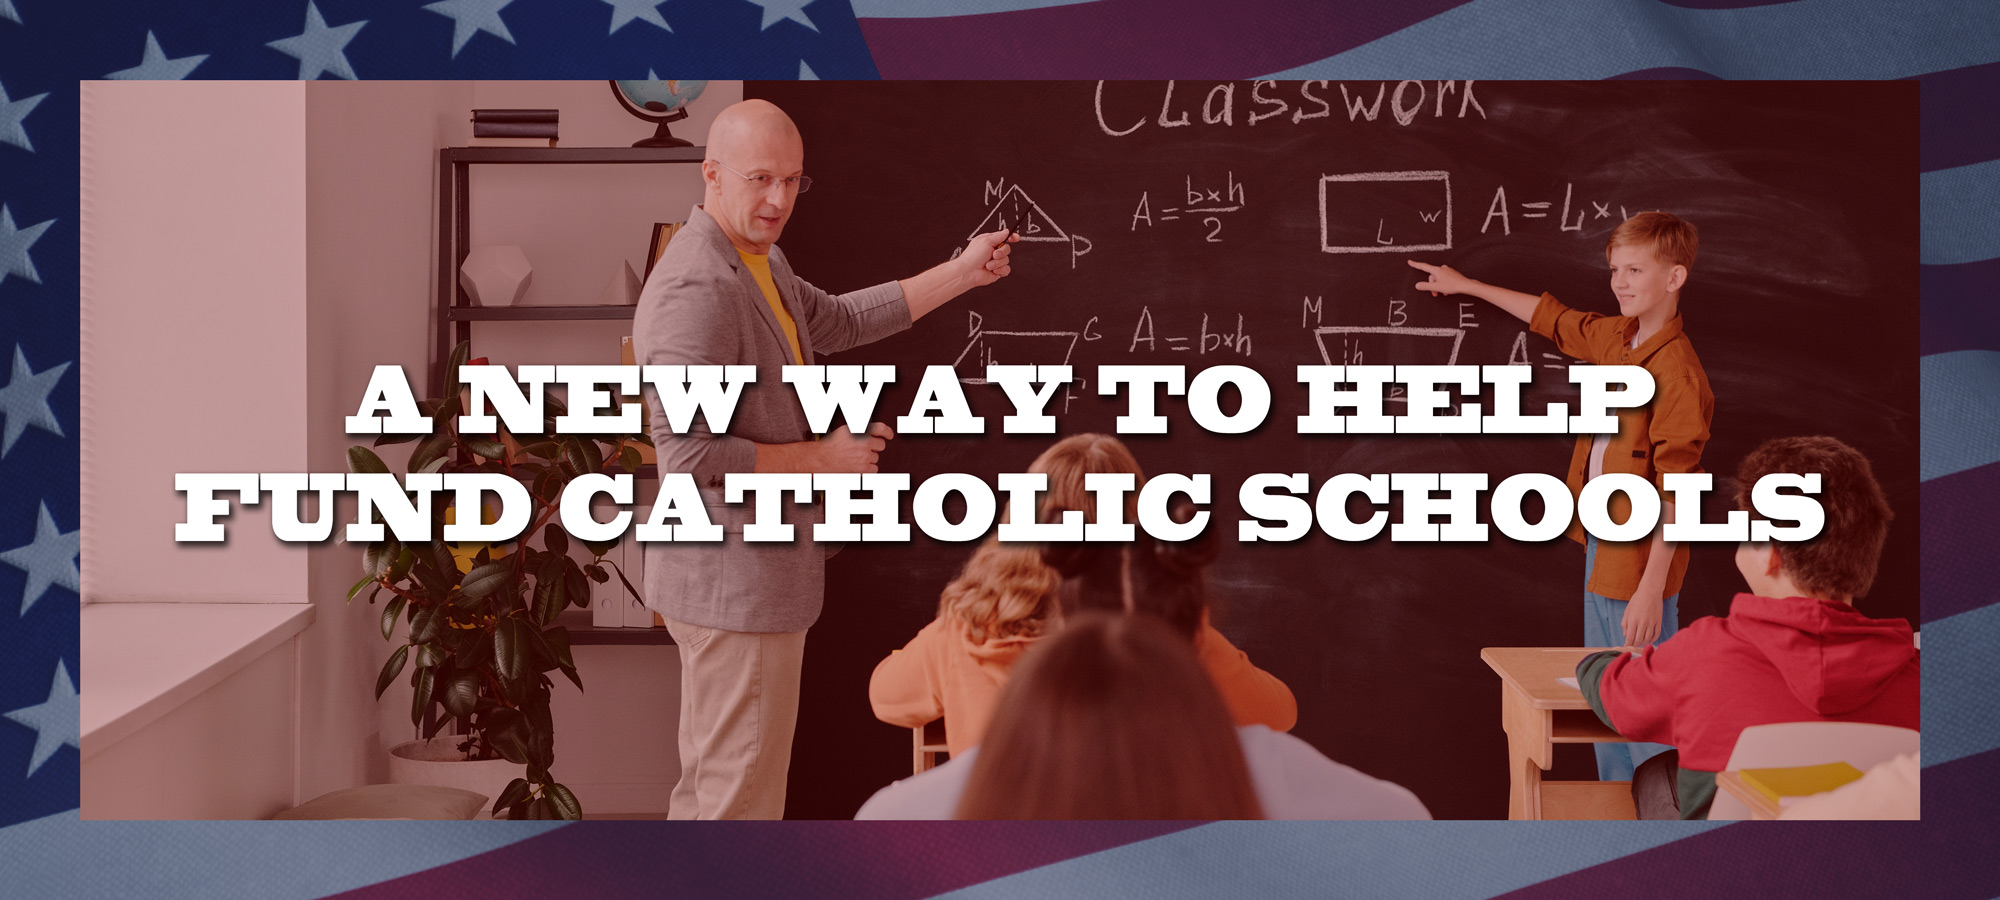 A new way help fund Catholic Schools